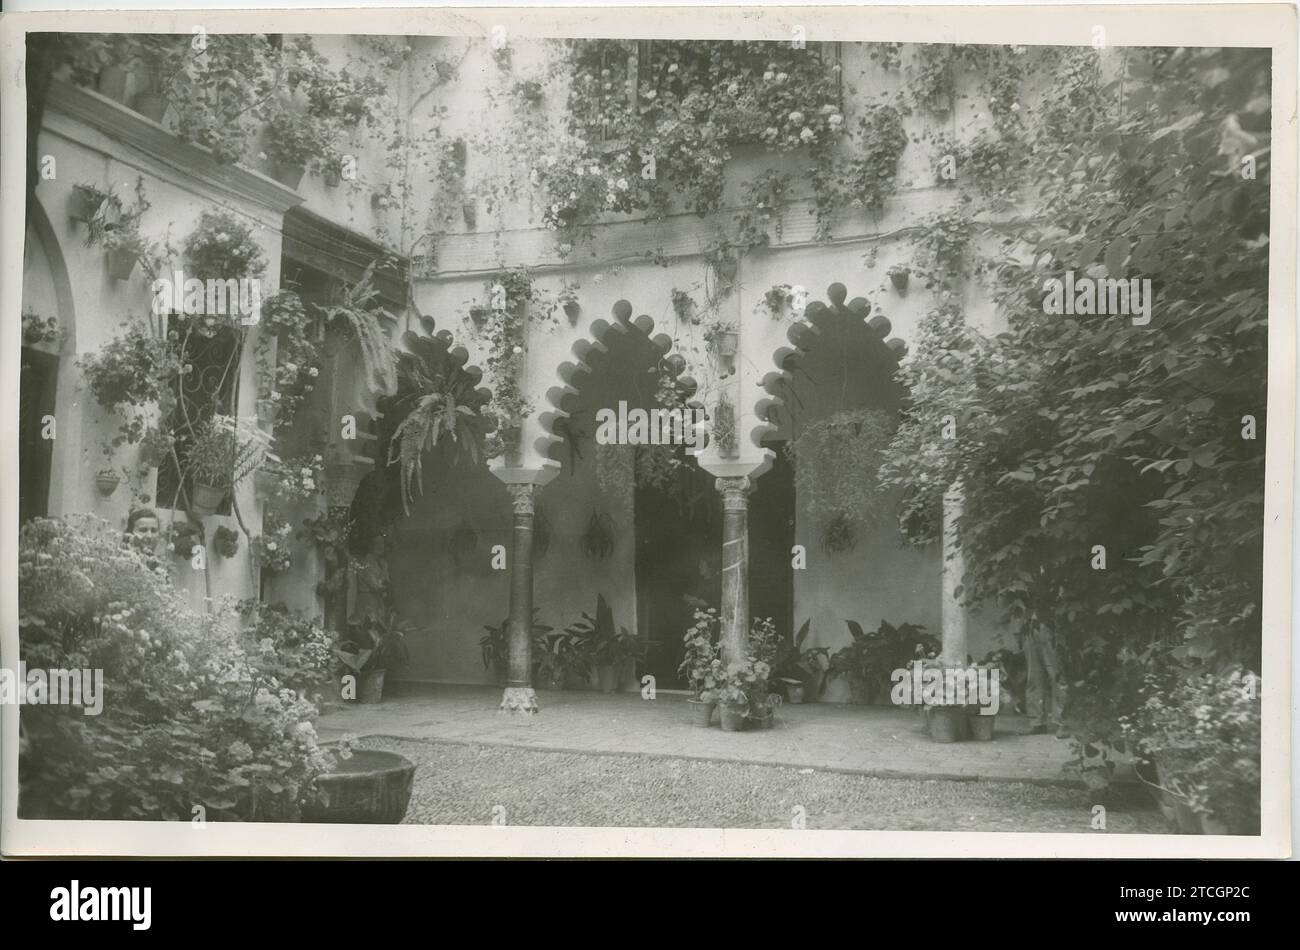 Córdoba, May 1960. This beautiful patio on Manrique Street, which won a first prize. Credit: Album / Archivo ABC / LADIS Ladislao Rodríguez Stock Photo